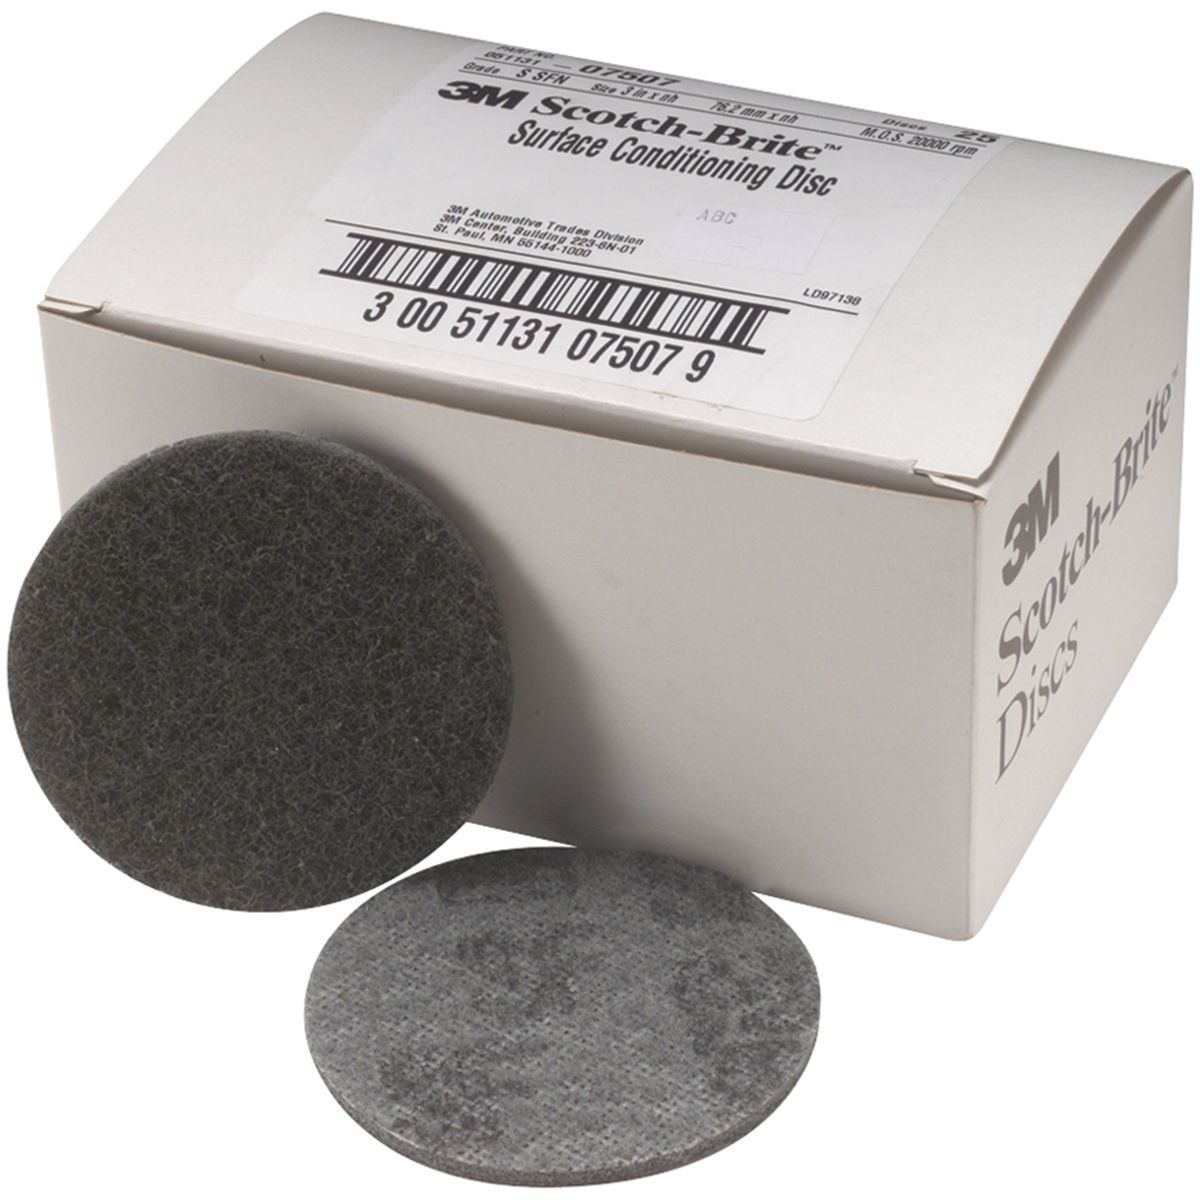 Scotch-Brite Velcro Surface Conditioning Discs - 3 In Fine - 25